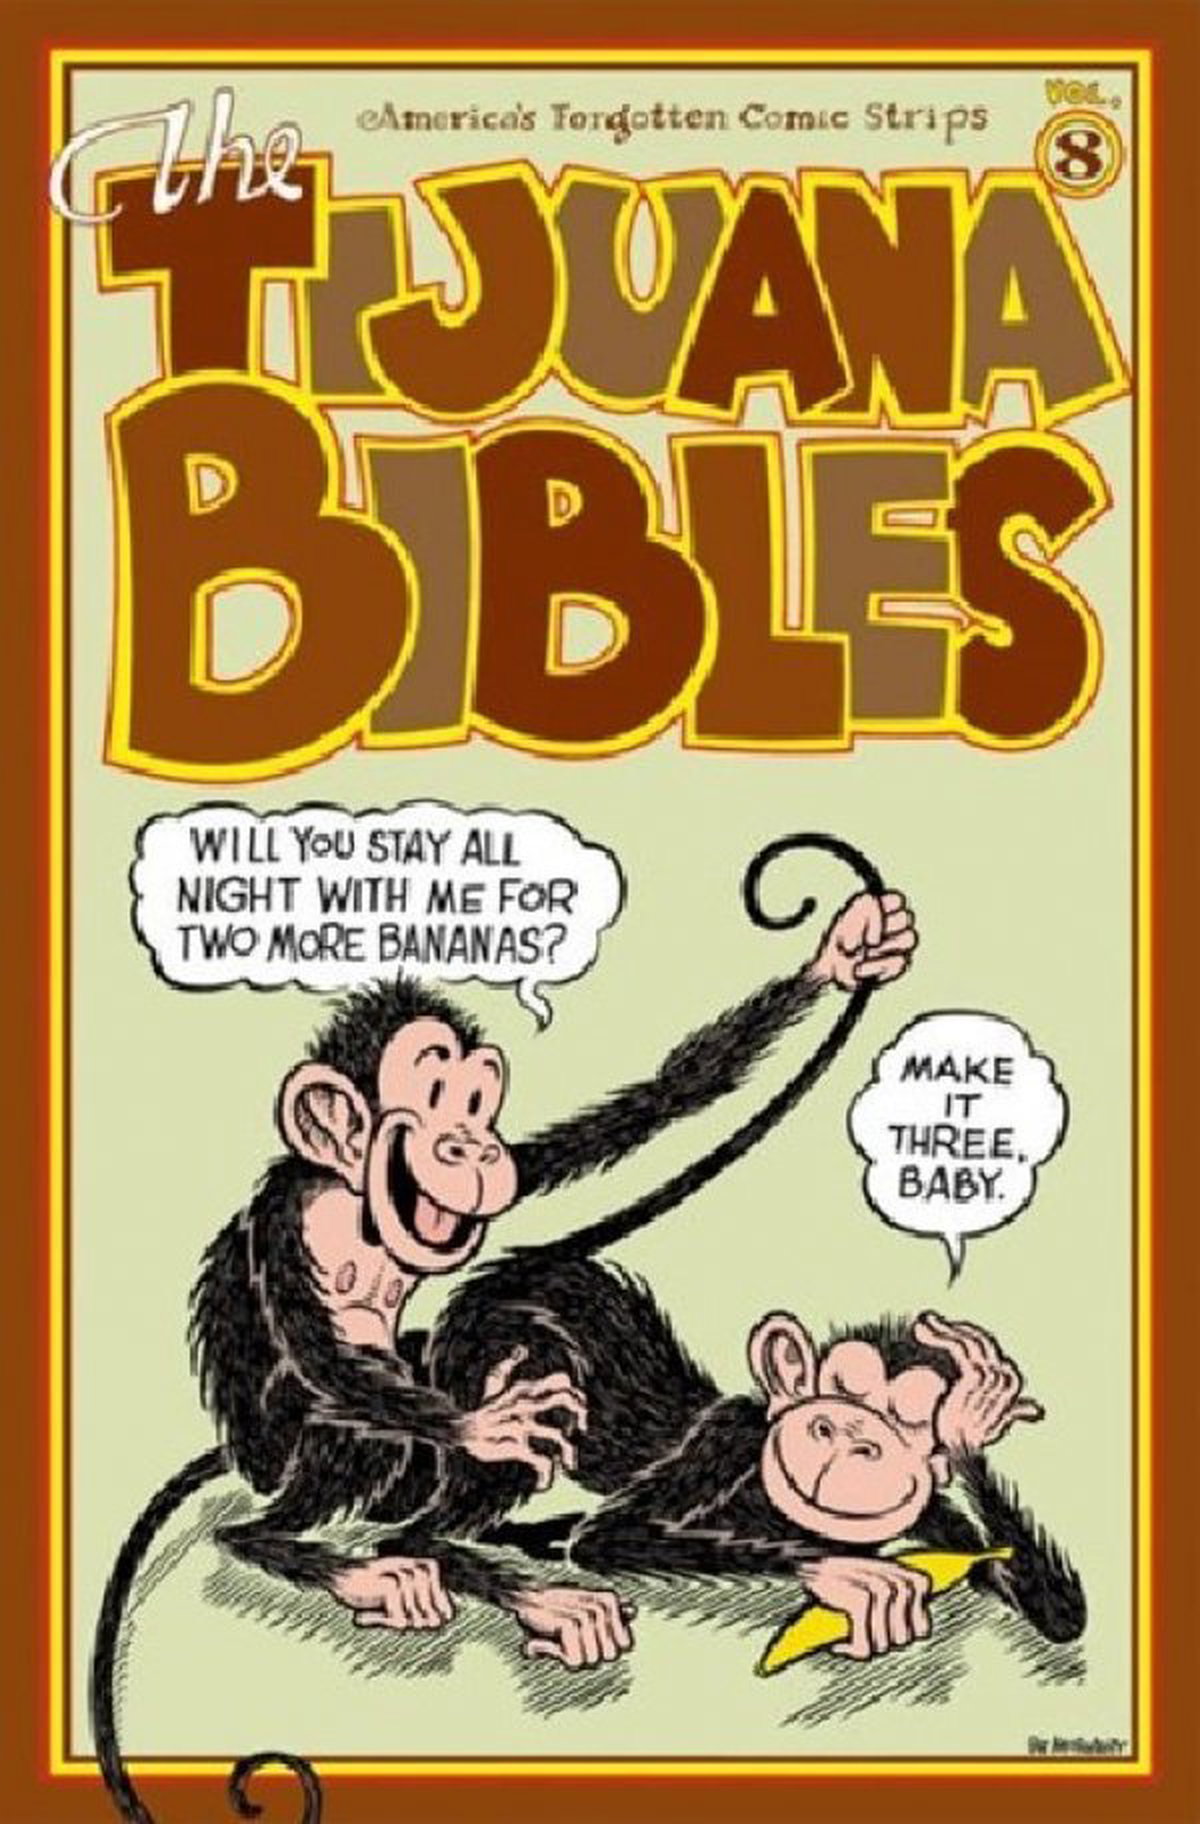 The Tijuana Bibles: America's Forgotten Comic Strips #8